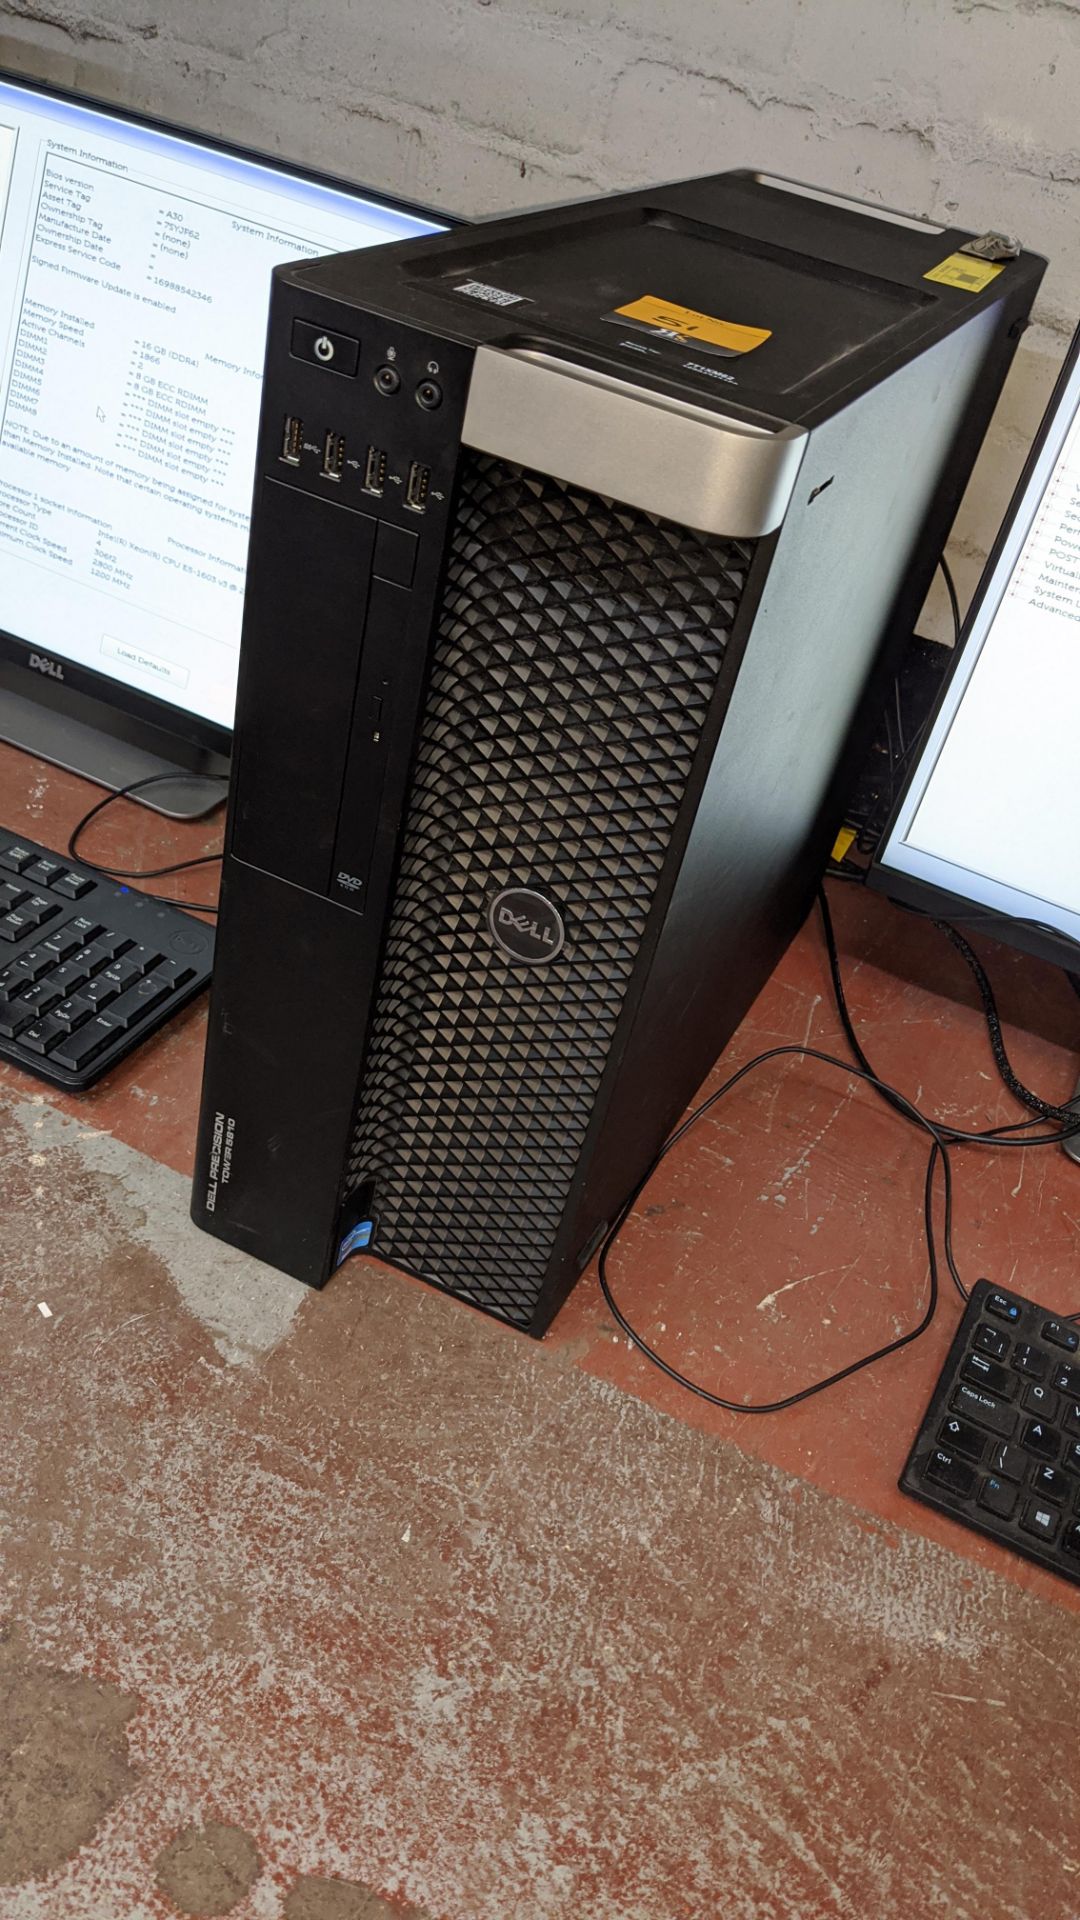 Dell Precision tower 5810 computer with Intel Xeon E5-1603 V3 processor, 16Gb RAM, 256Gb SSD etc. in - Image 3 of 5